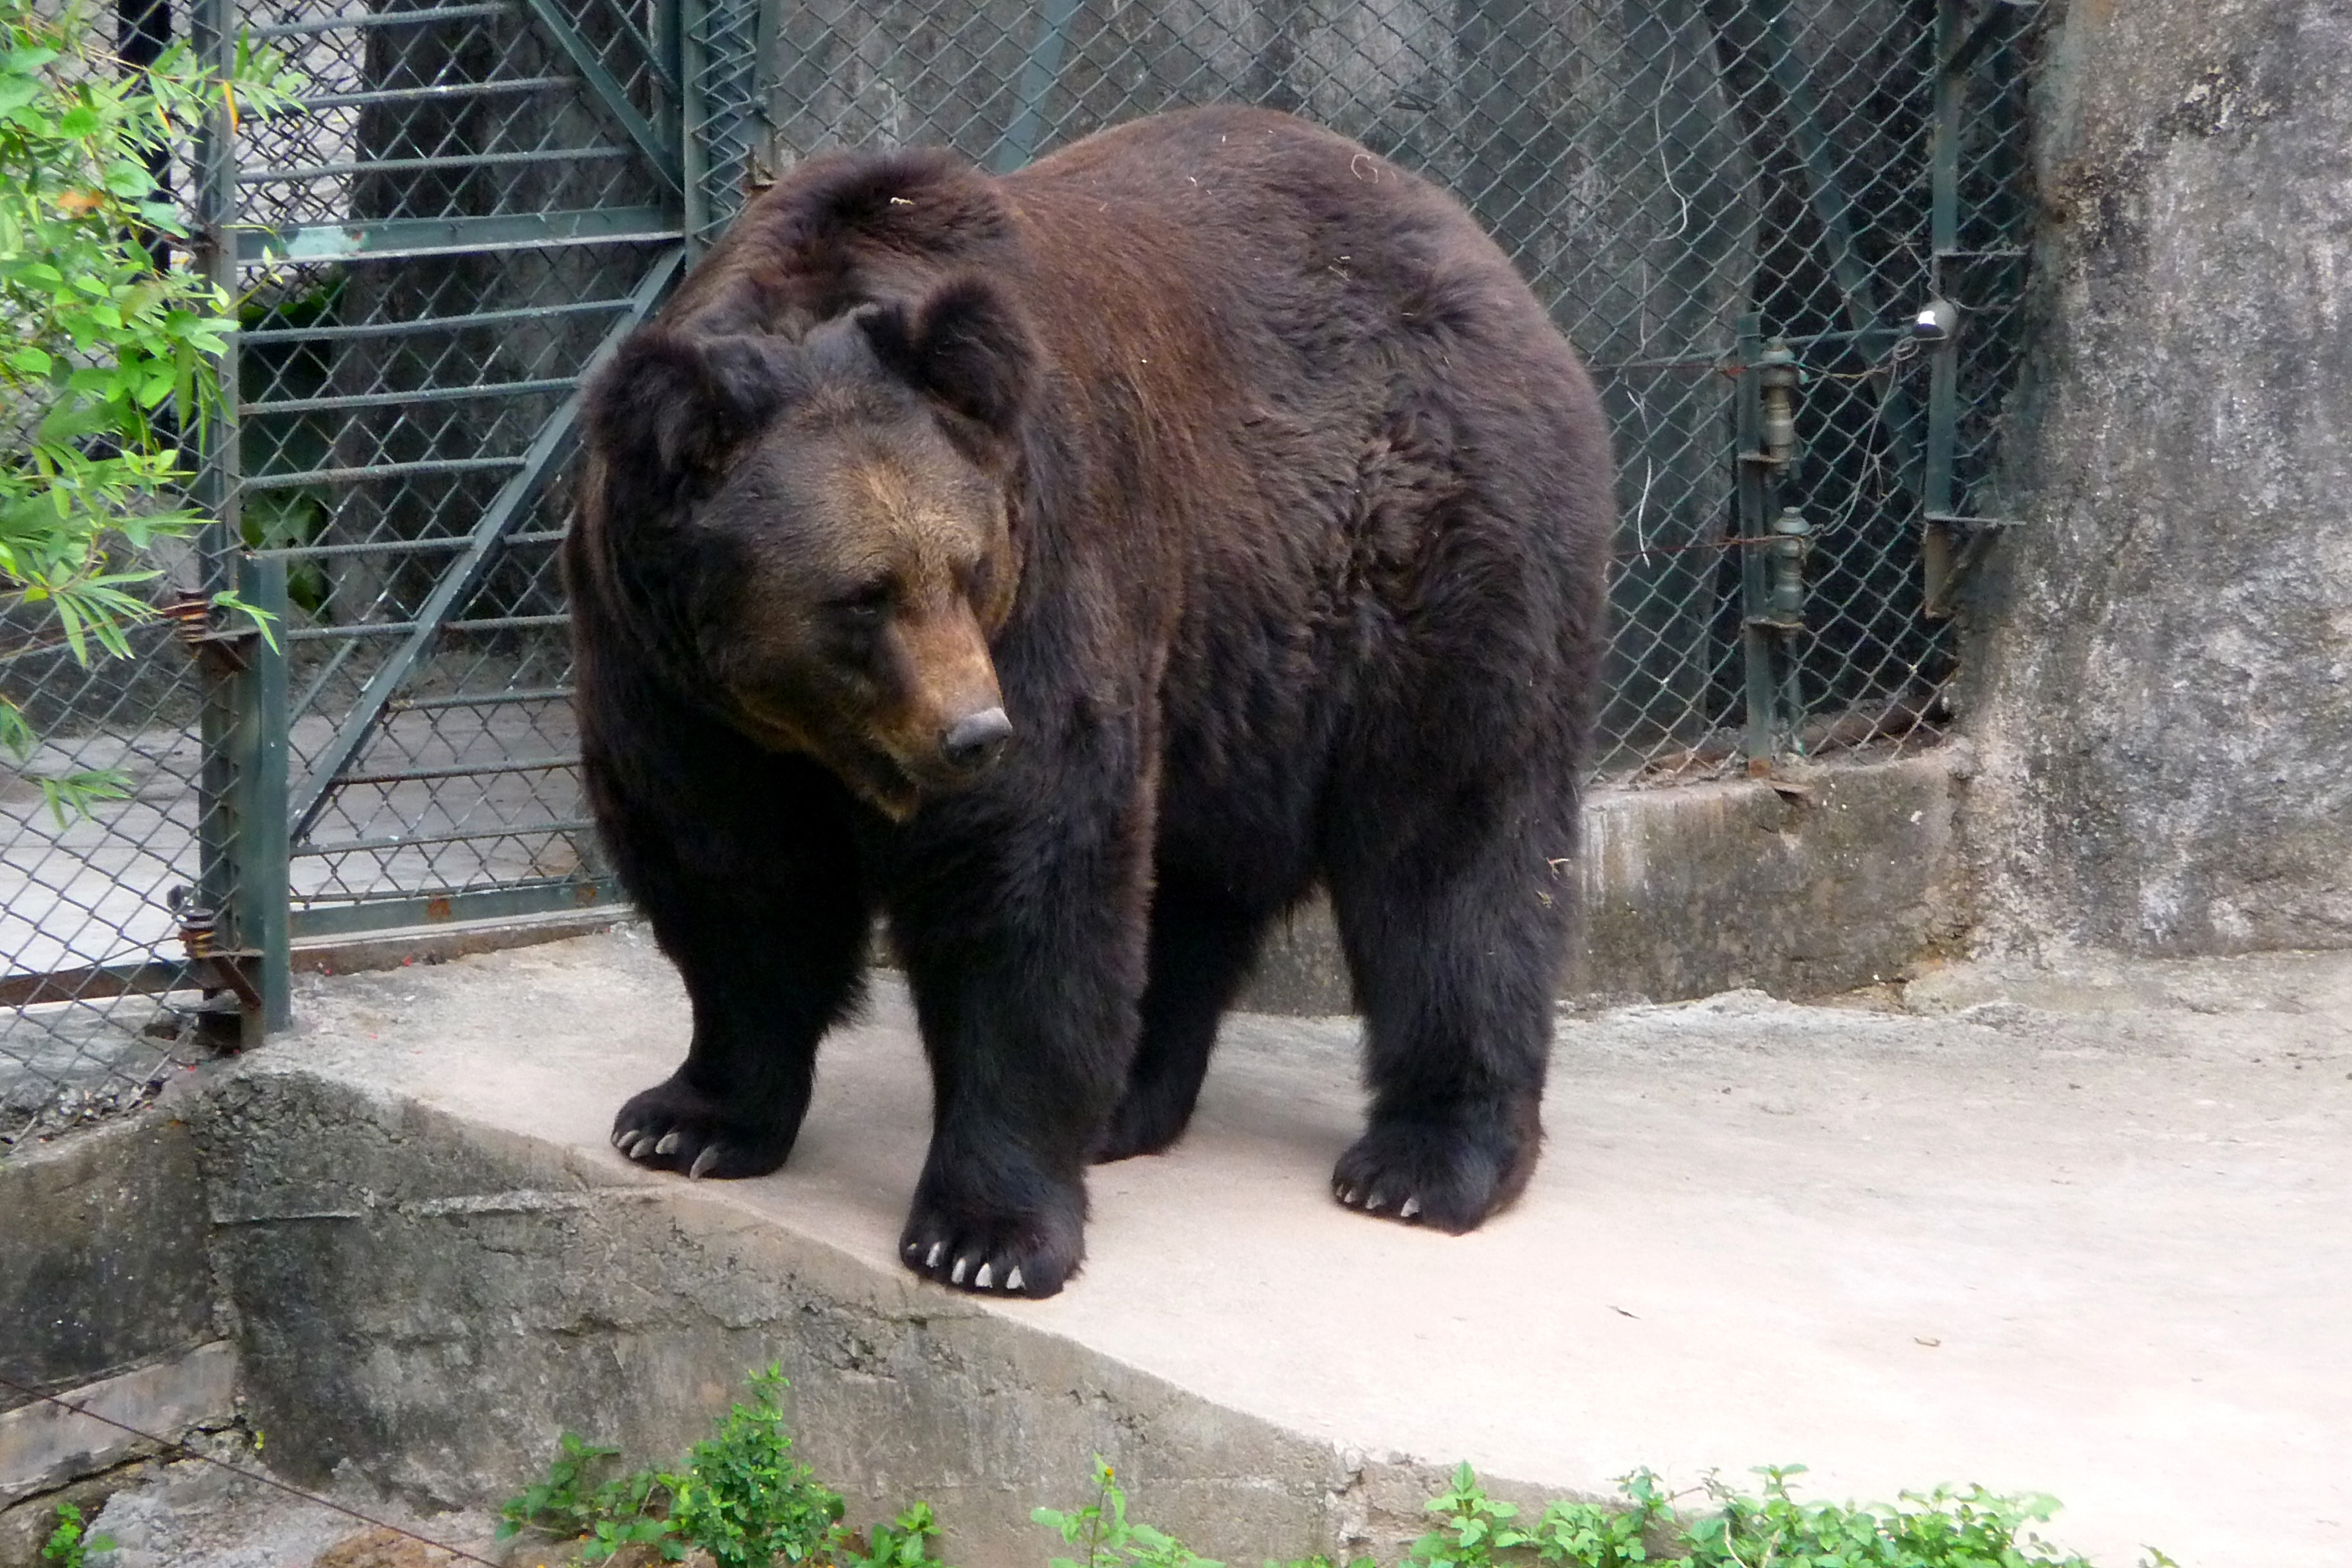 Bear Parks - The worlds cruelest tourist attractions